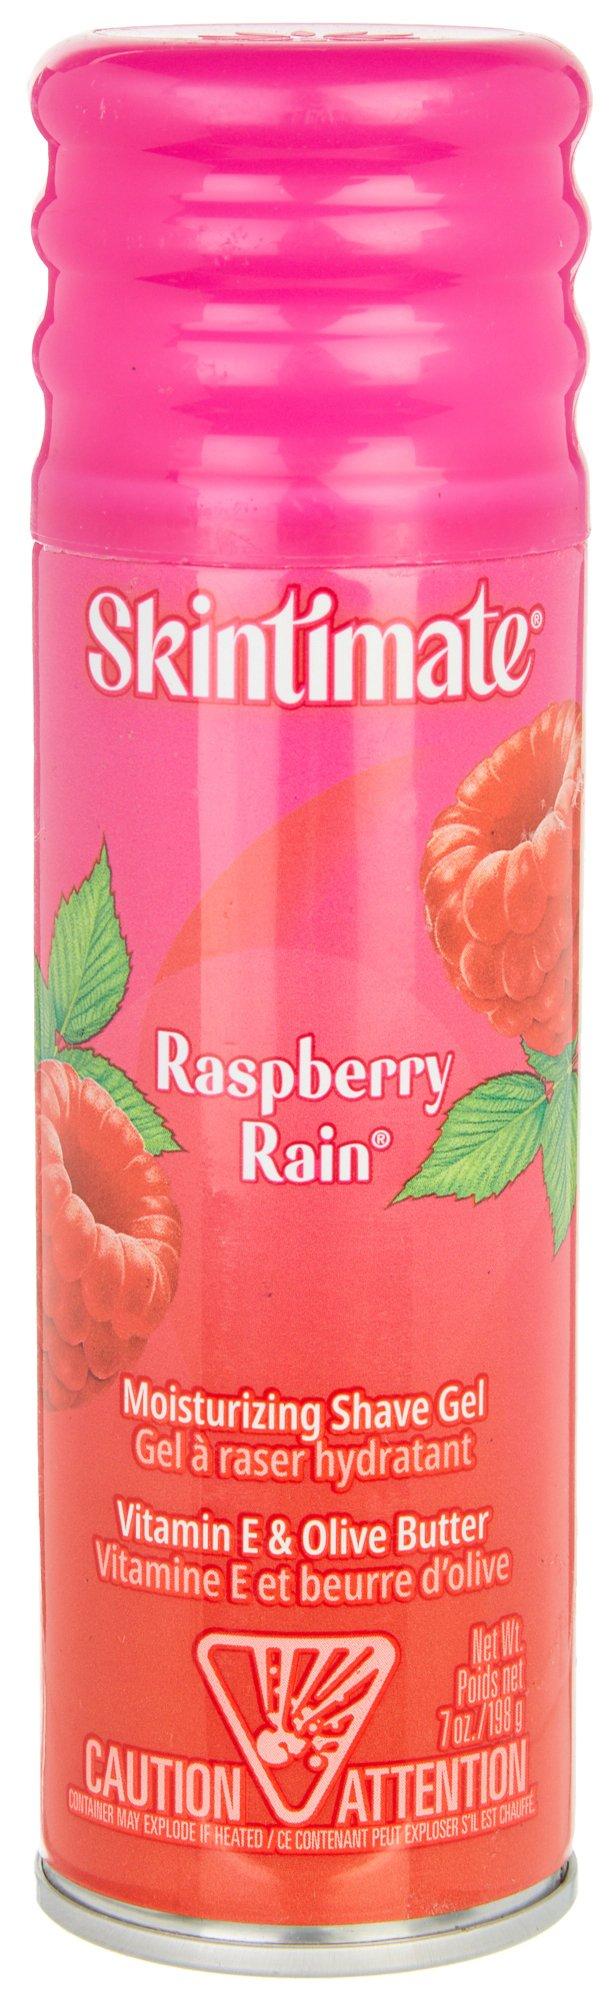 Raspberry Rain Moisturizing Shave Gel 7 oz.